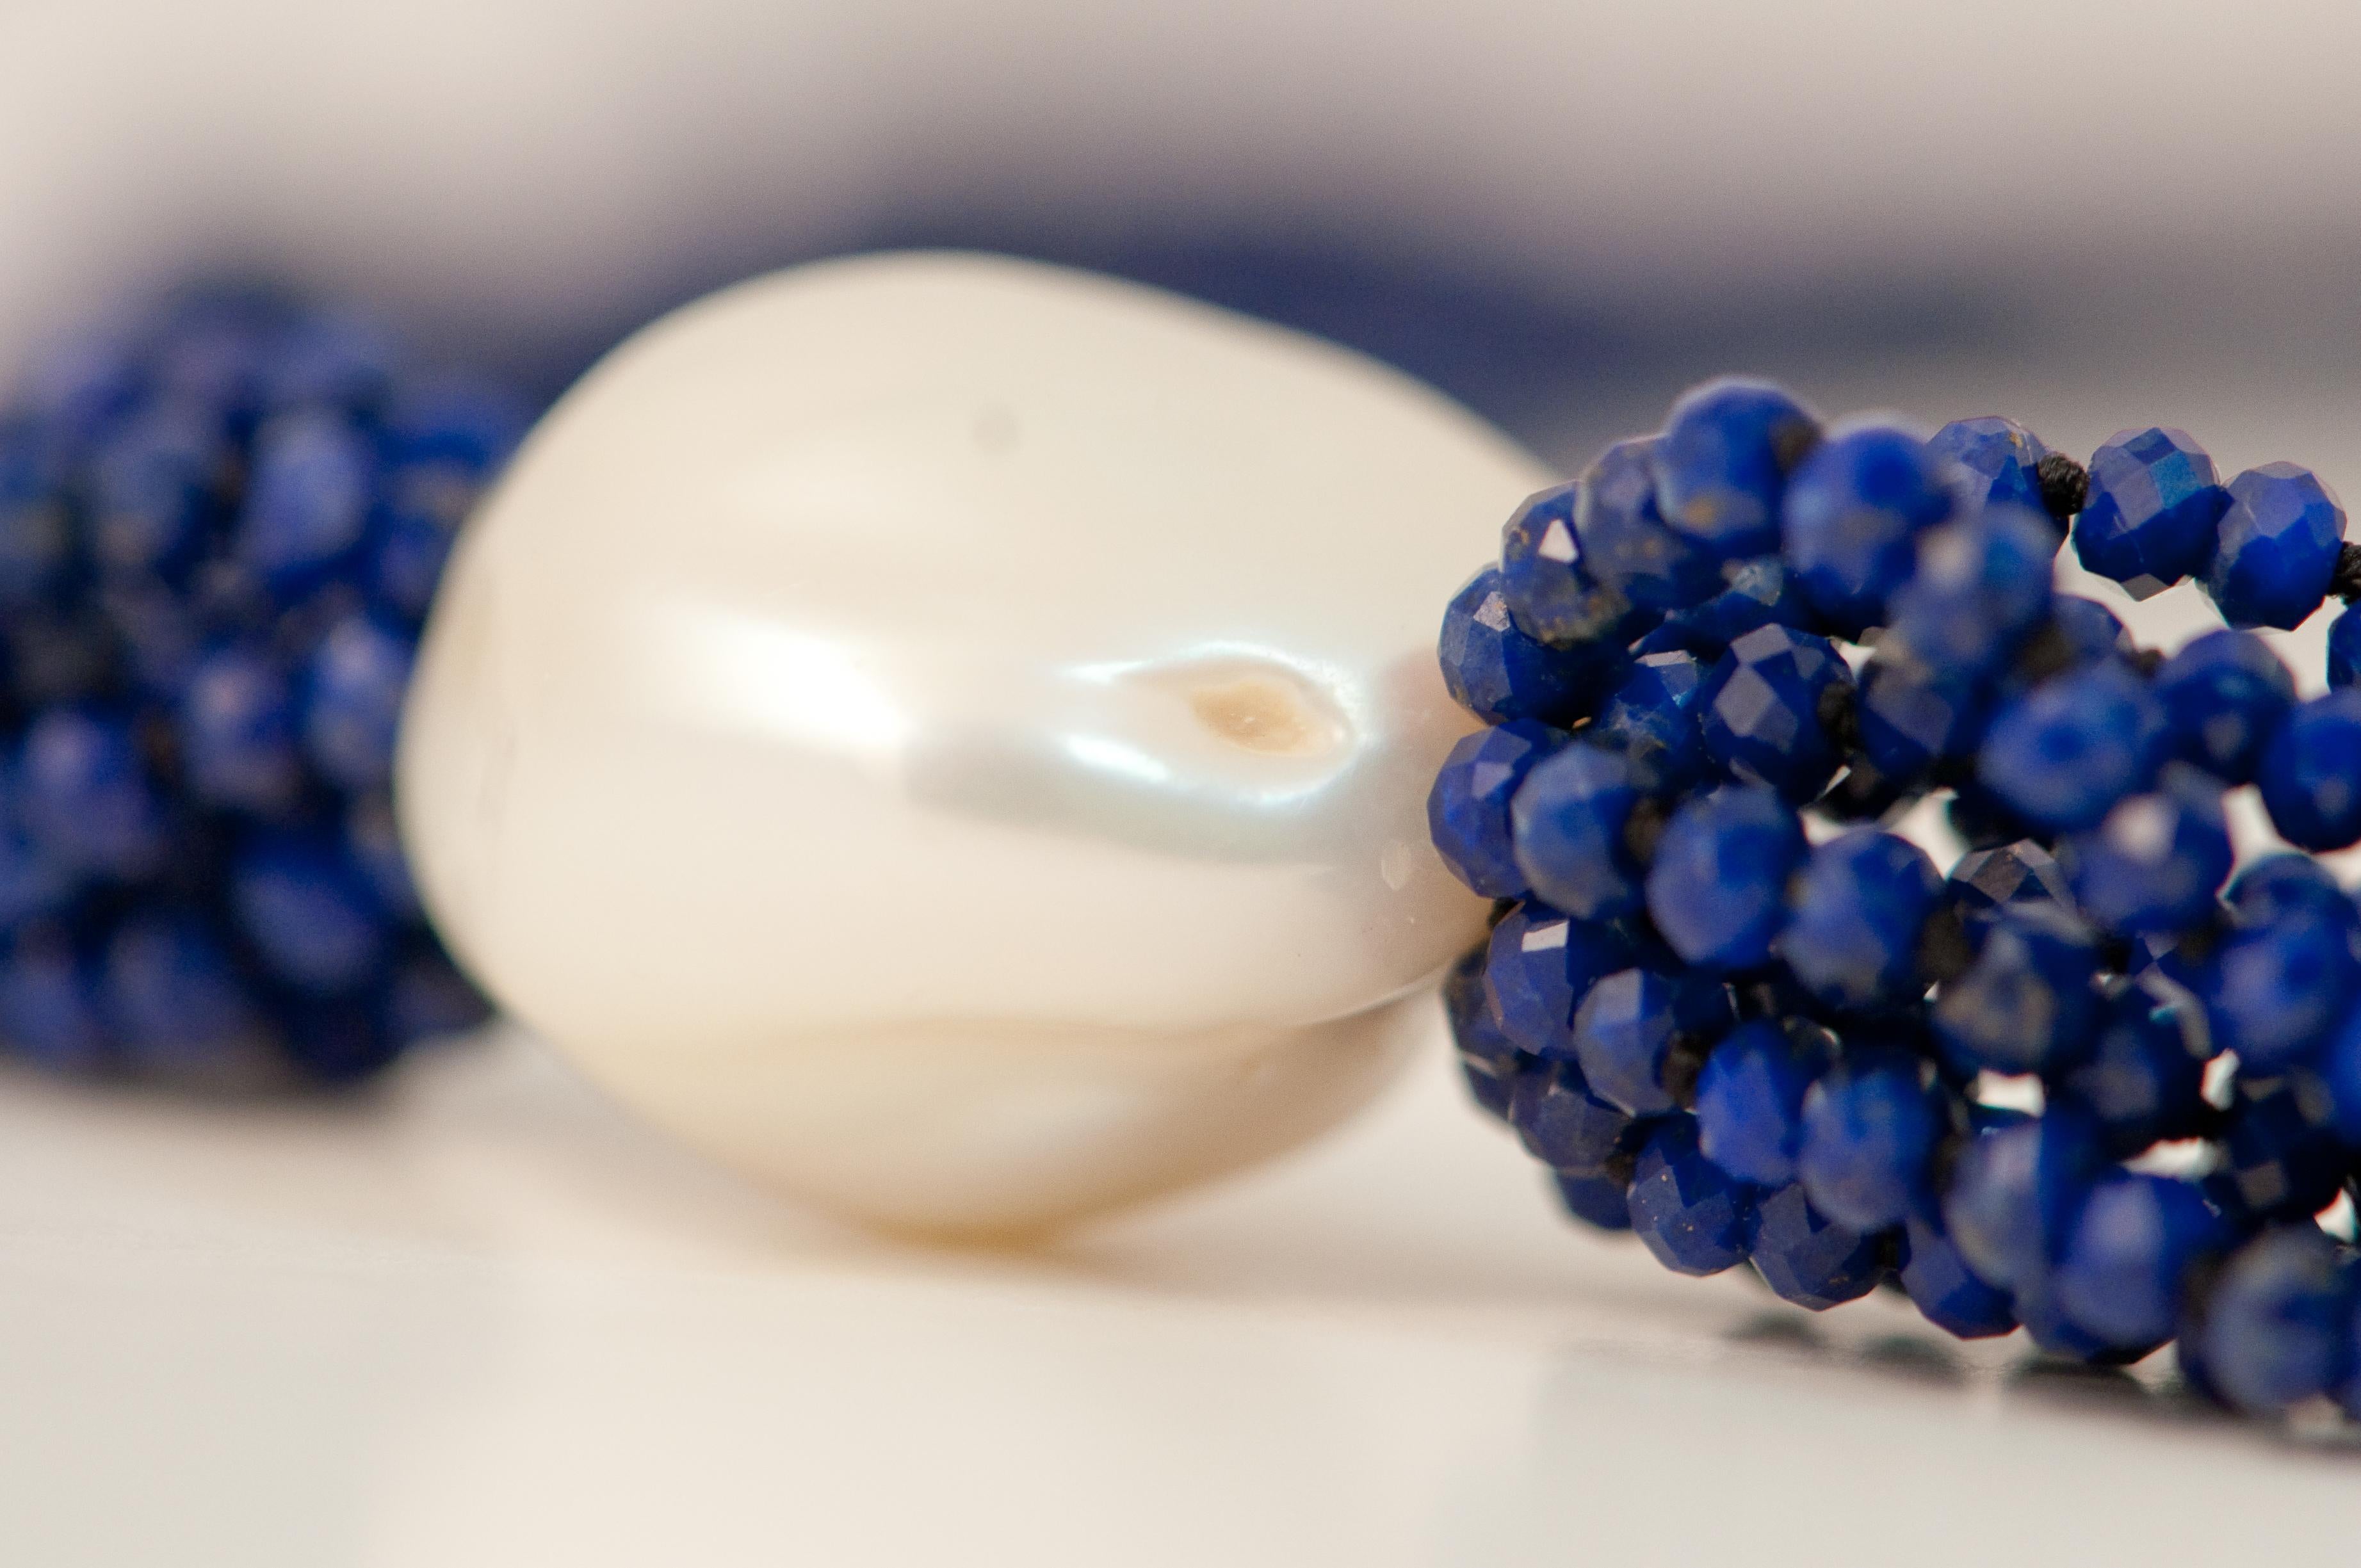 Briolette Cut Lapis Lazuli Beaded Necklaces, Baroque Pearl, with Bakelite Claps